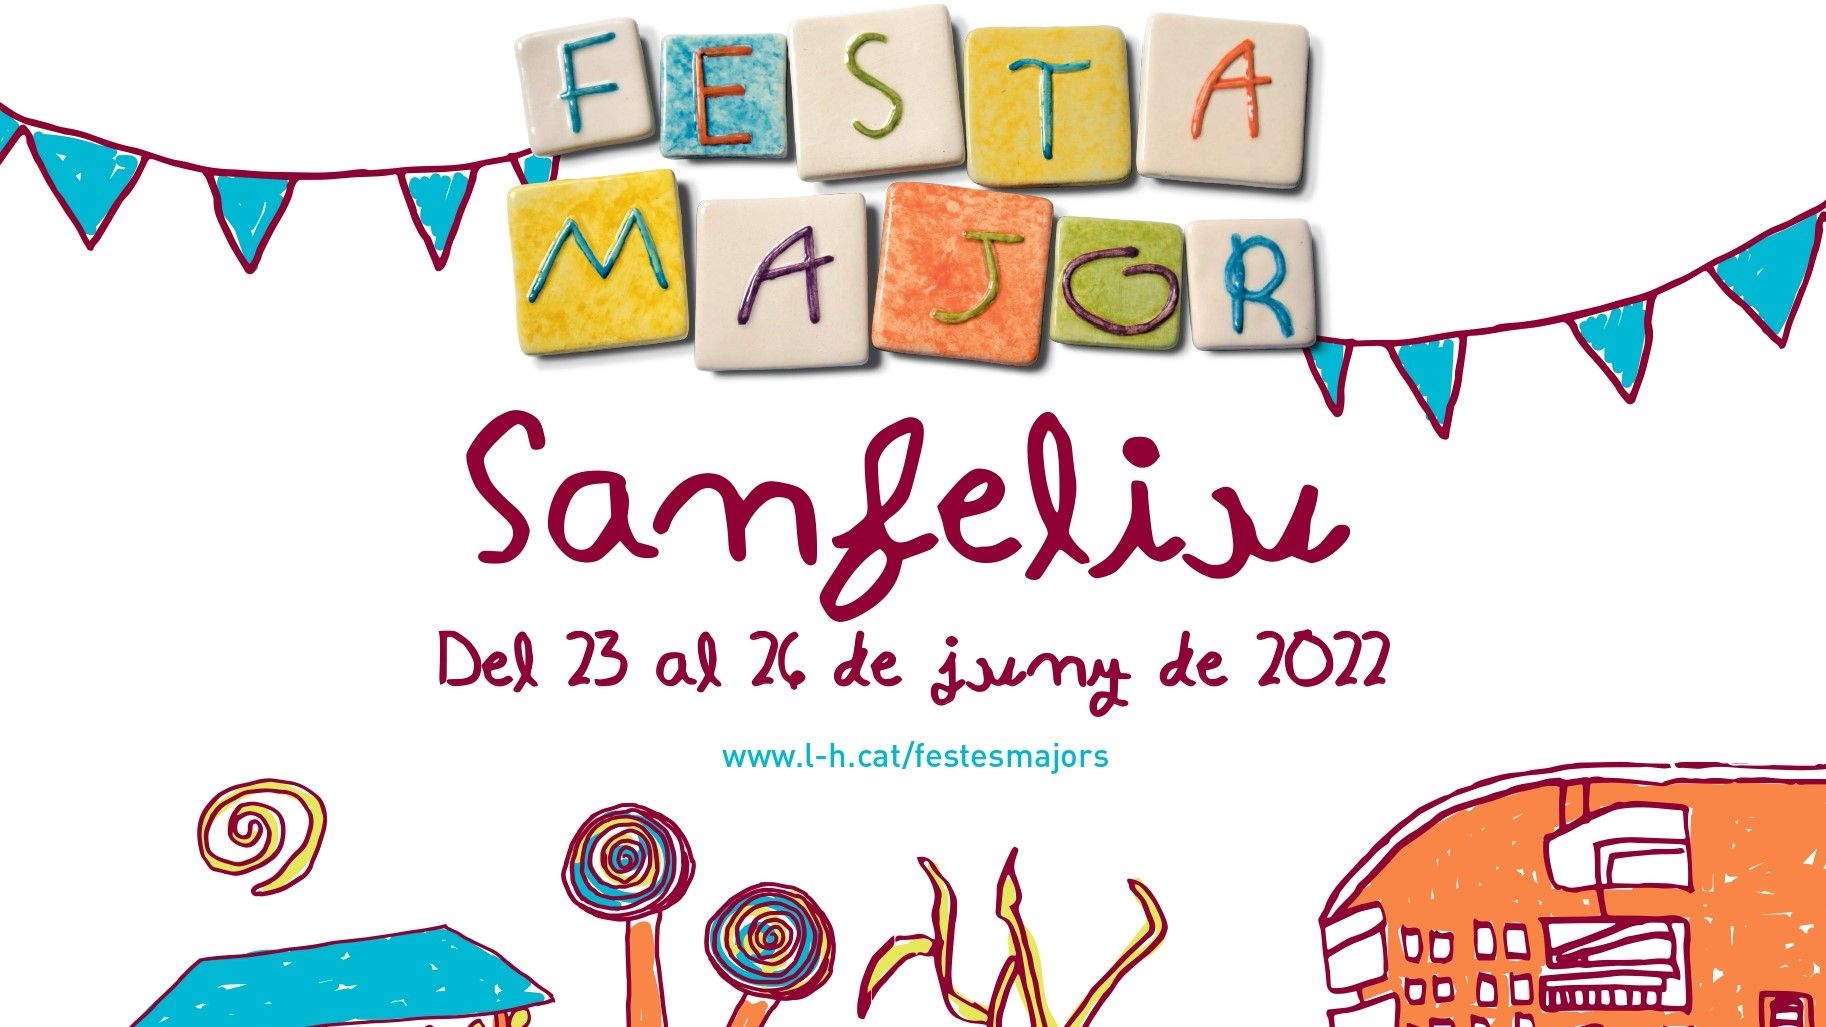 Cartel de la Fiesta Mayor del barrio de Sanfeliu de L'Hospitalet.